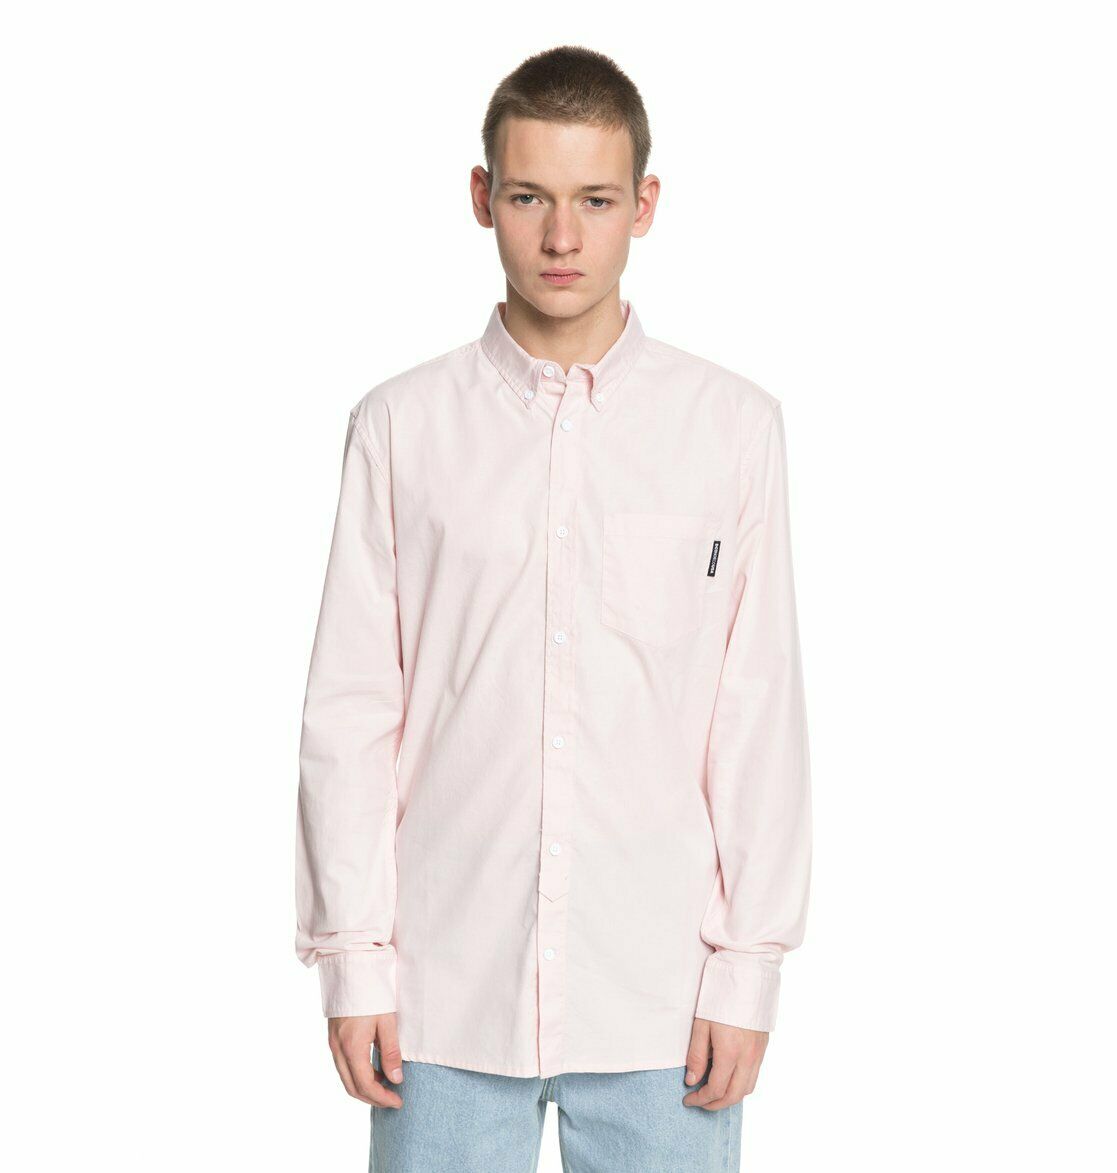 DC Shoes Men's Classic Oxford Light Pink L/S Woven Shirt